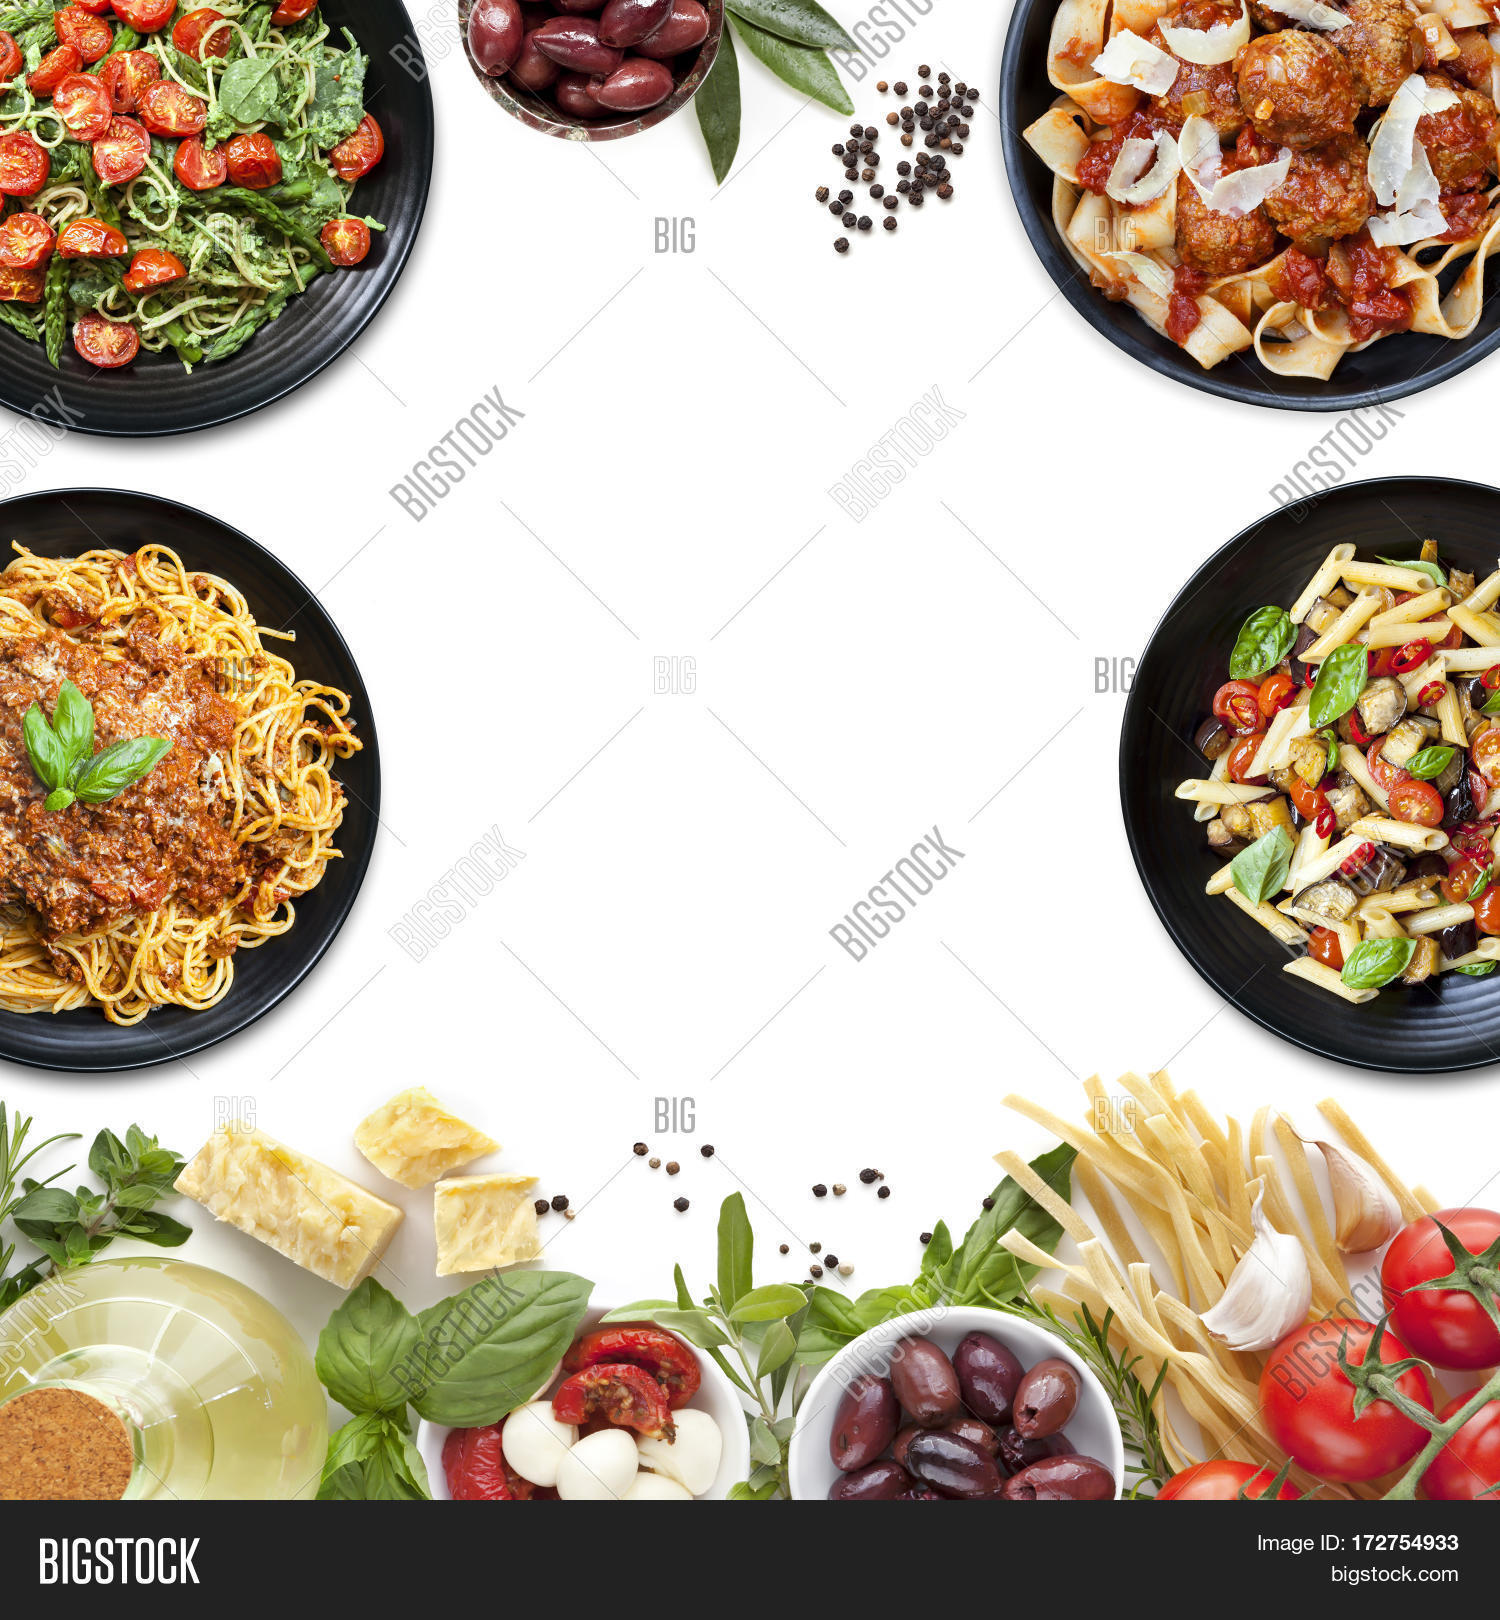 Collage Italian Meals Ingredients. Image & Photo | Bigstock